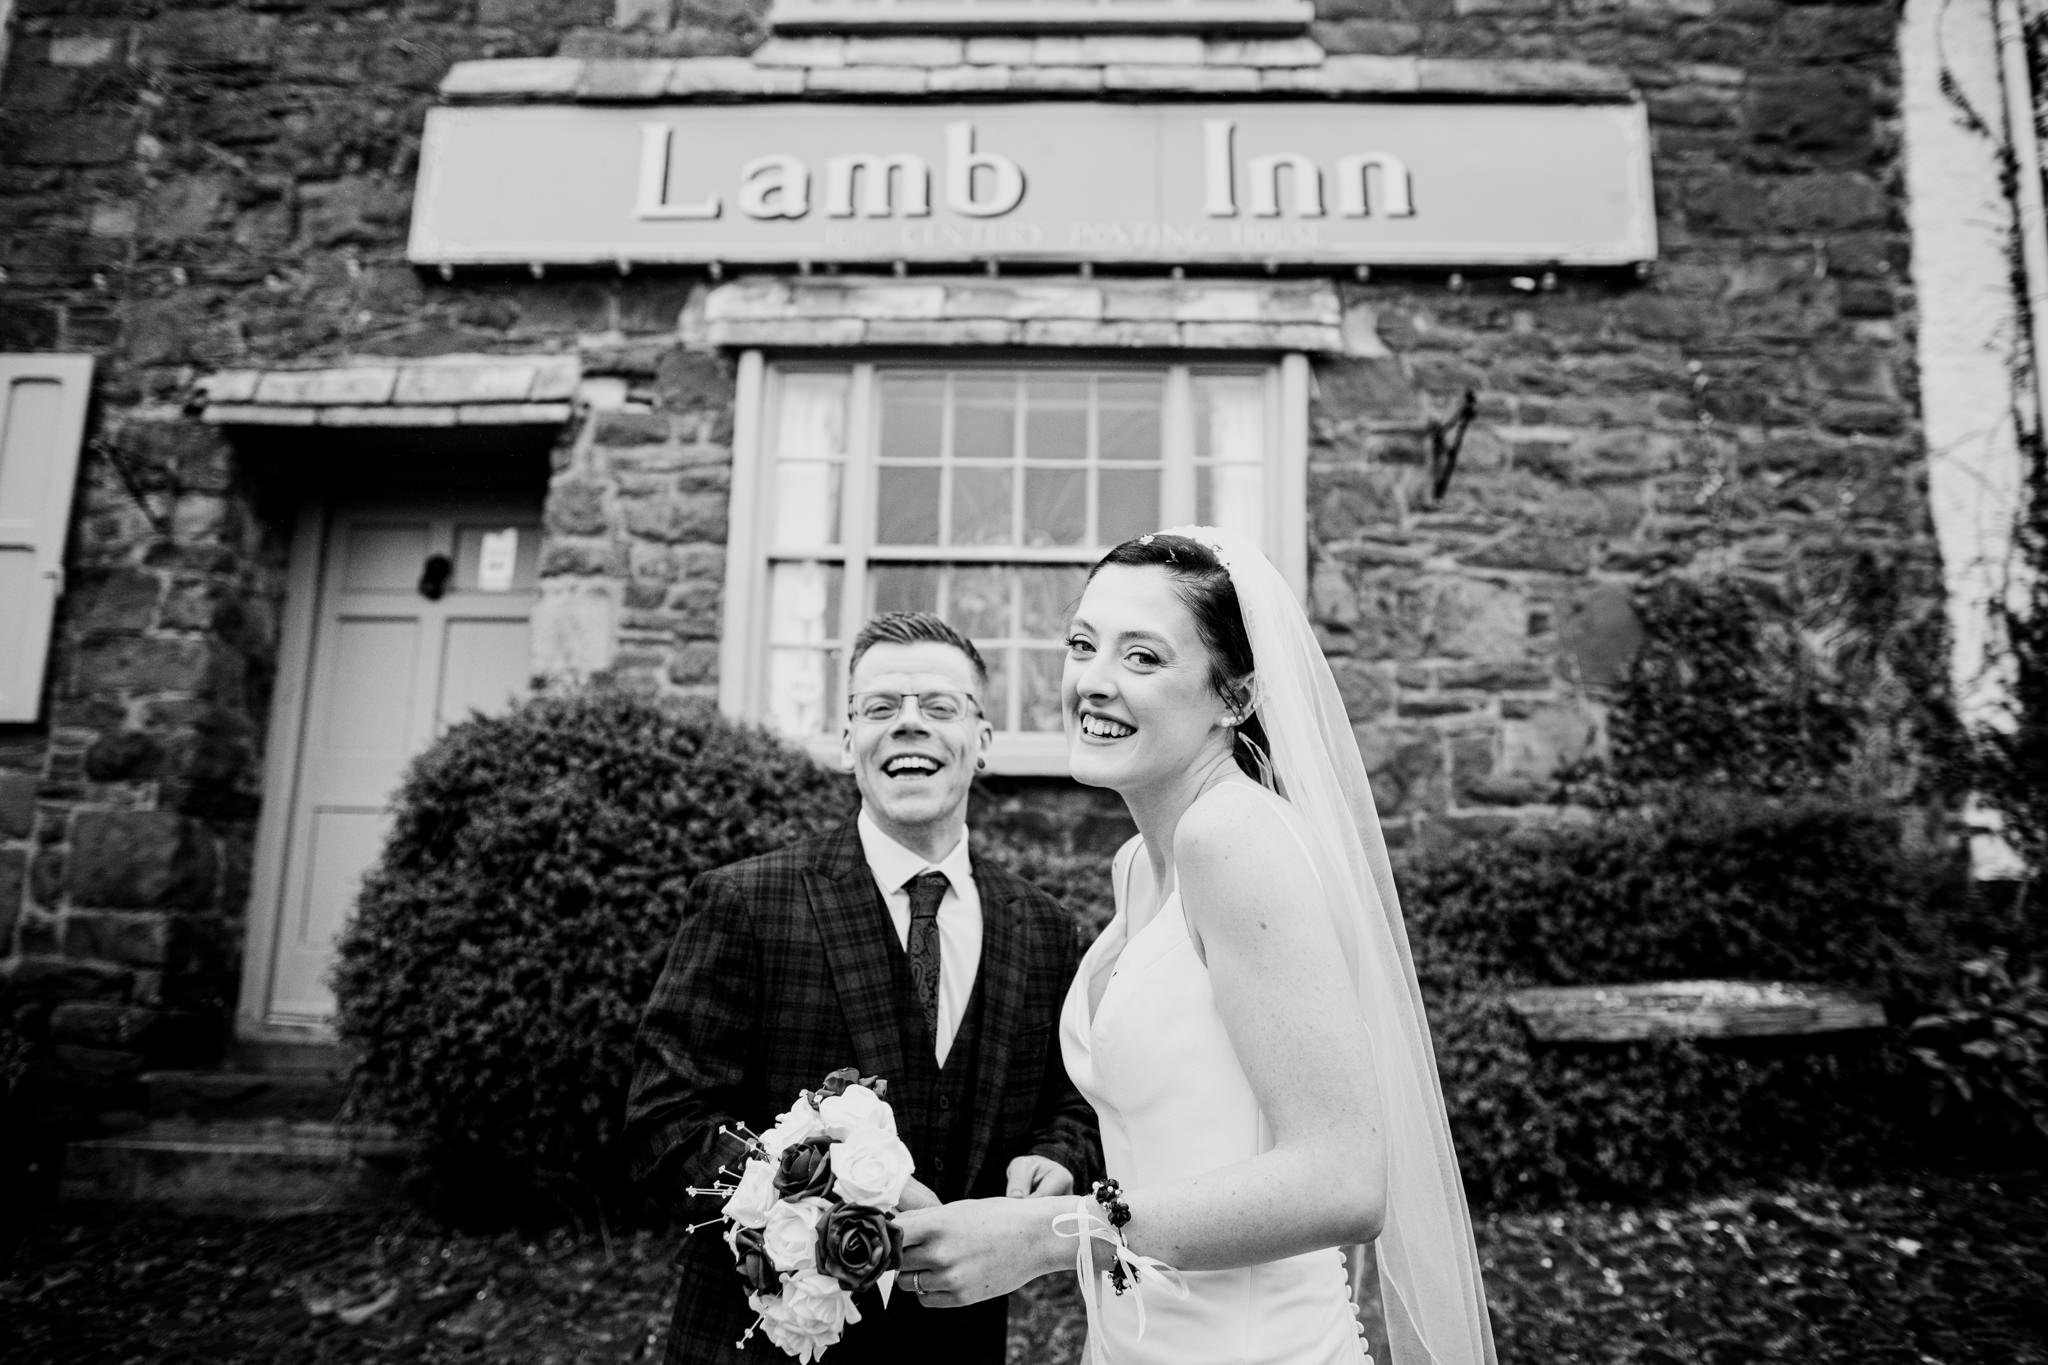 The Lamb Inn Sandford Wedding Photographer - 020.jpg